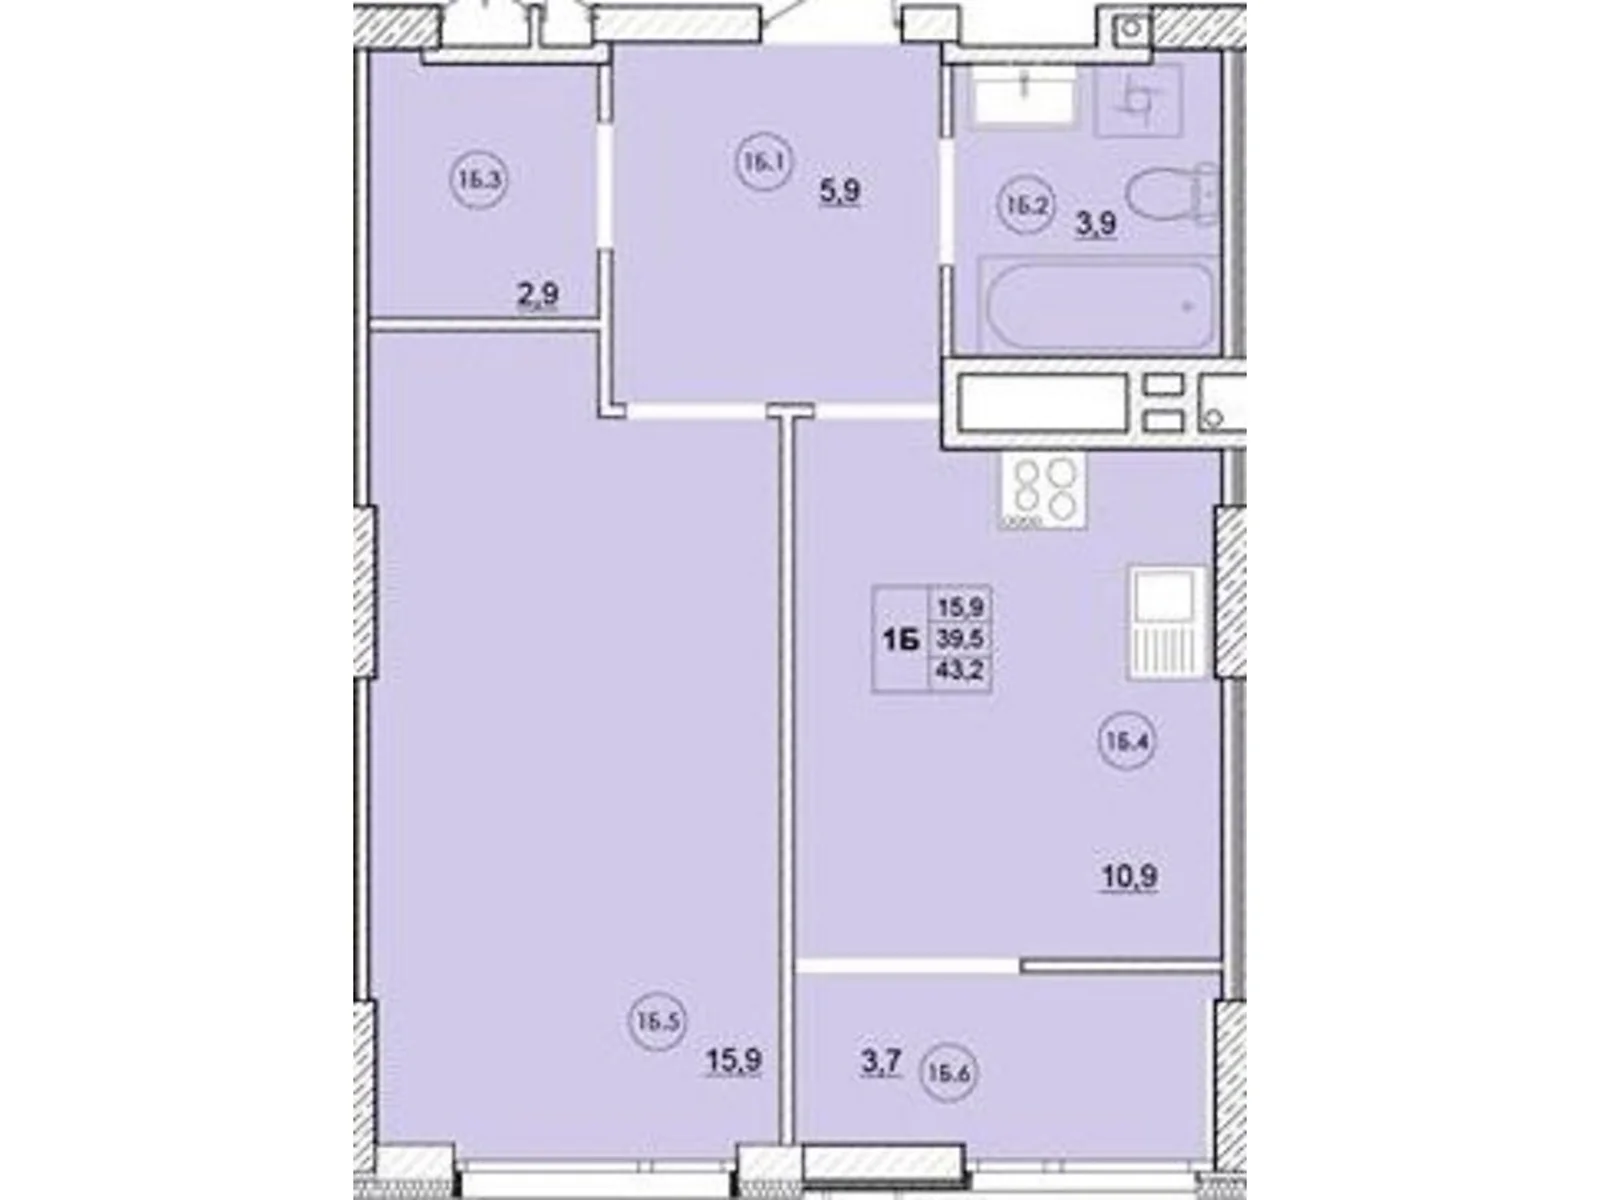 Продается 1-комнатная квартира 42.2 кв. м в Чернигове - фото 1